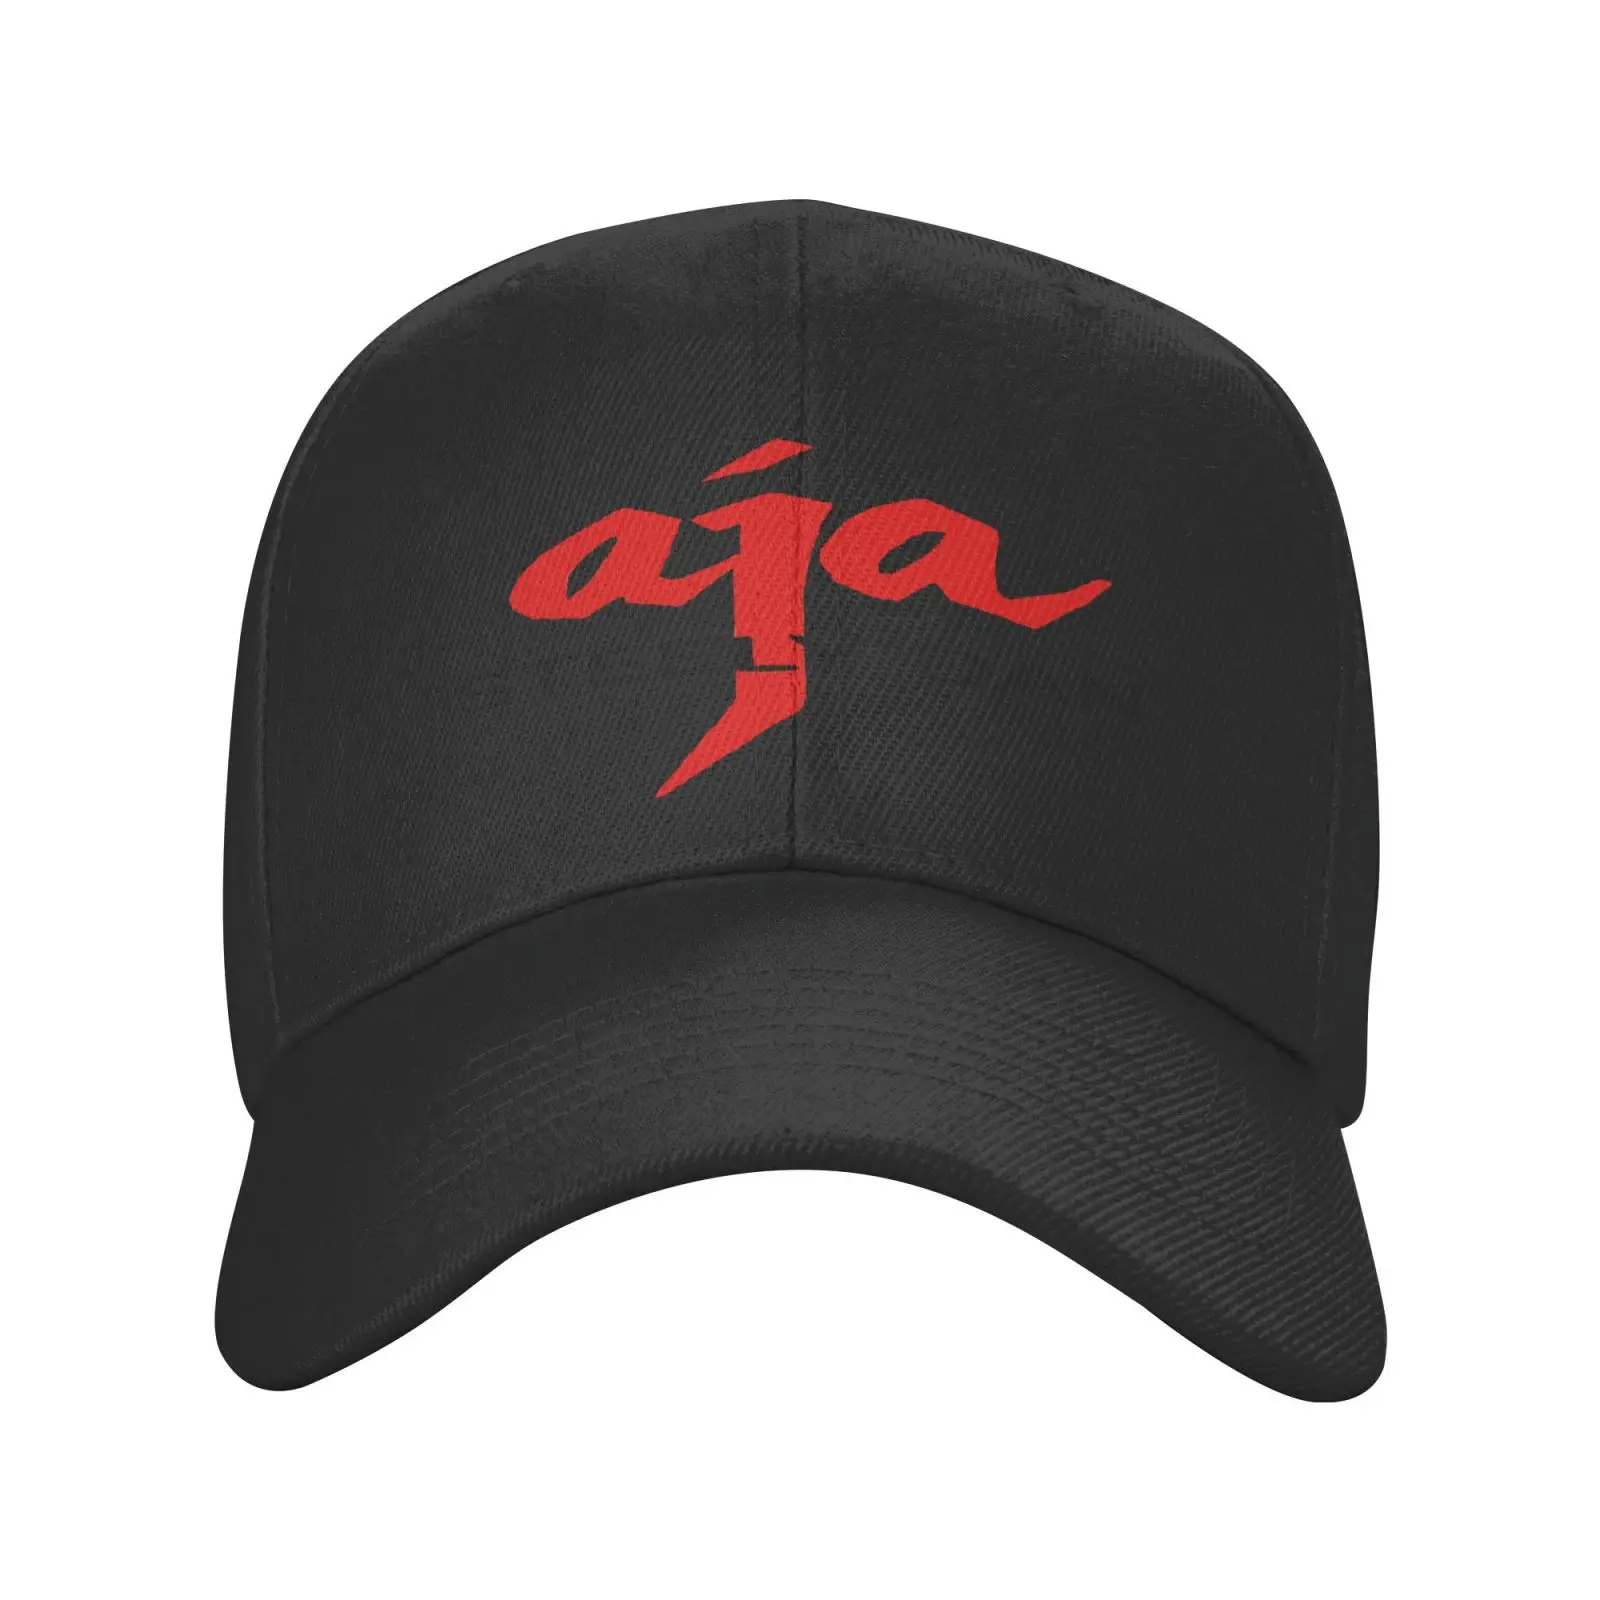 

Кепка Steely Dan Aja для девочек кепка для женщин Кепка-тракер летняя рыболовная кепка бейсболка для мужчин берет Мужская Панама